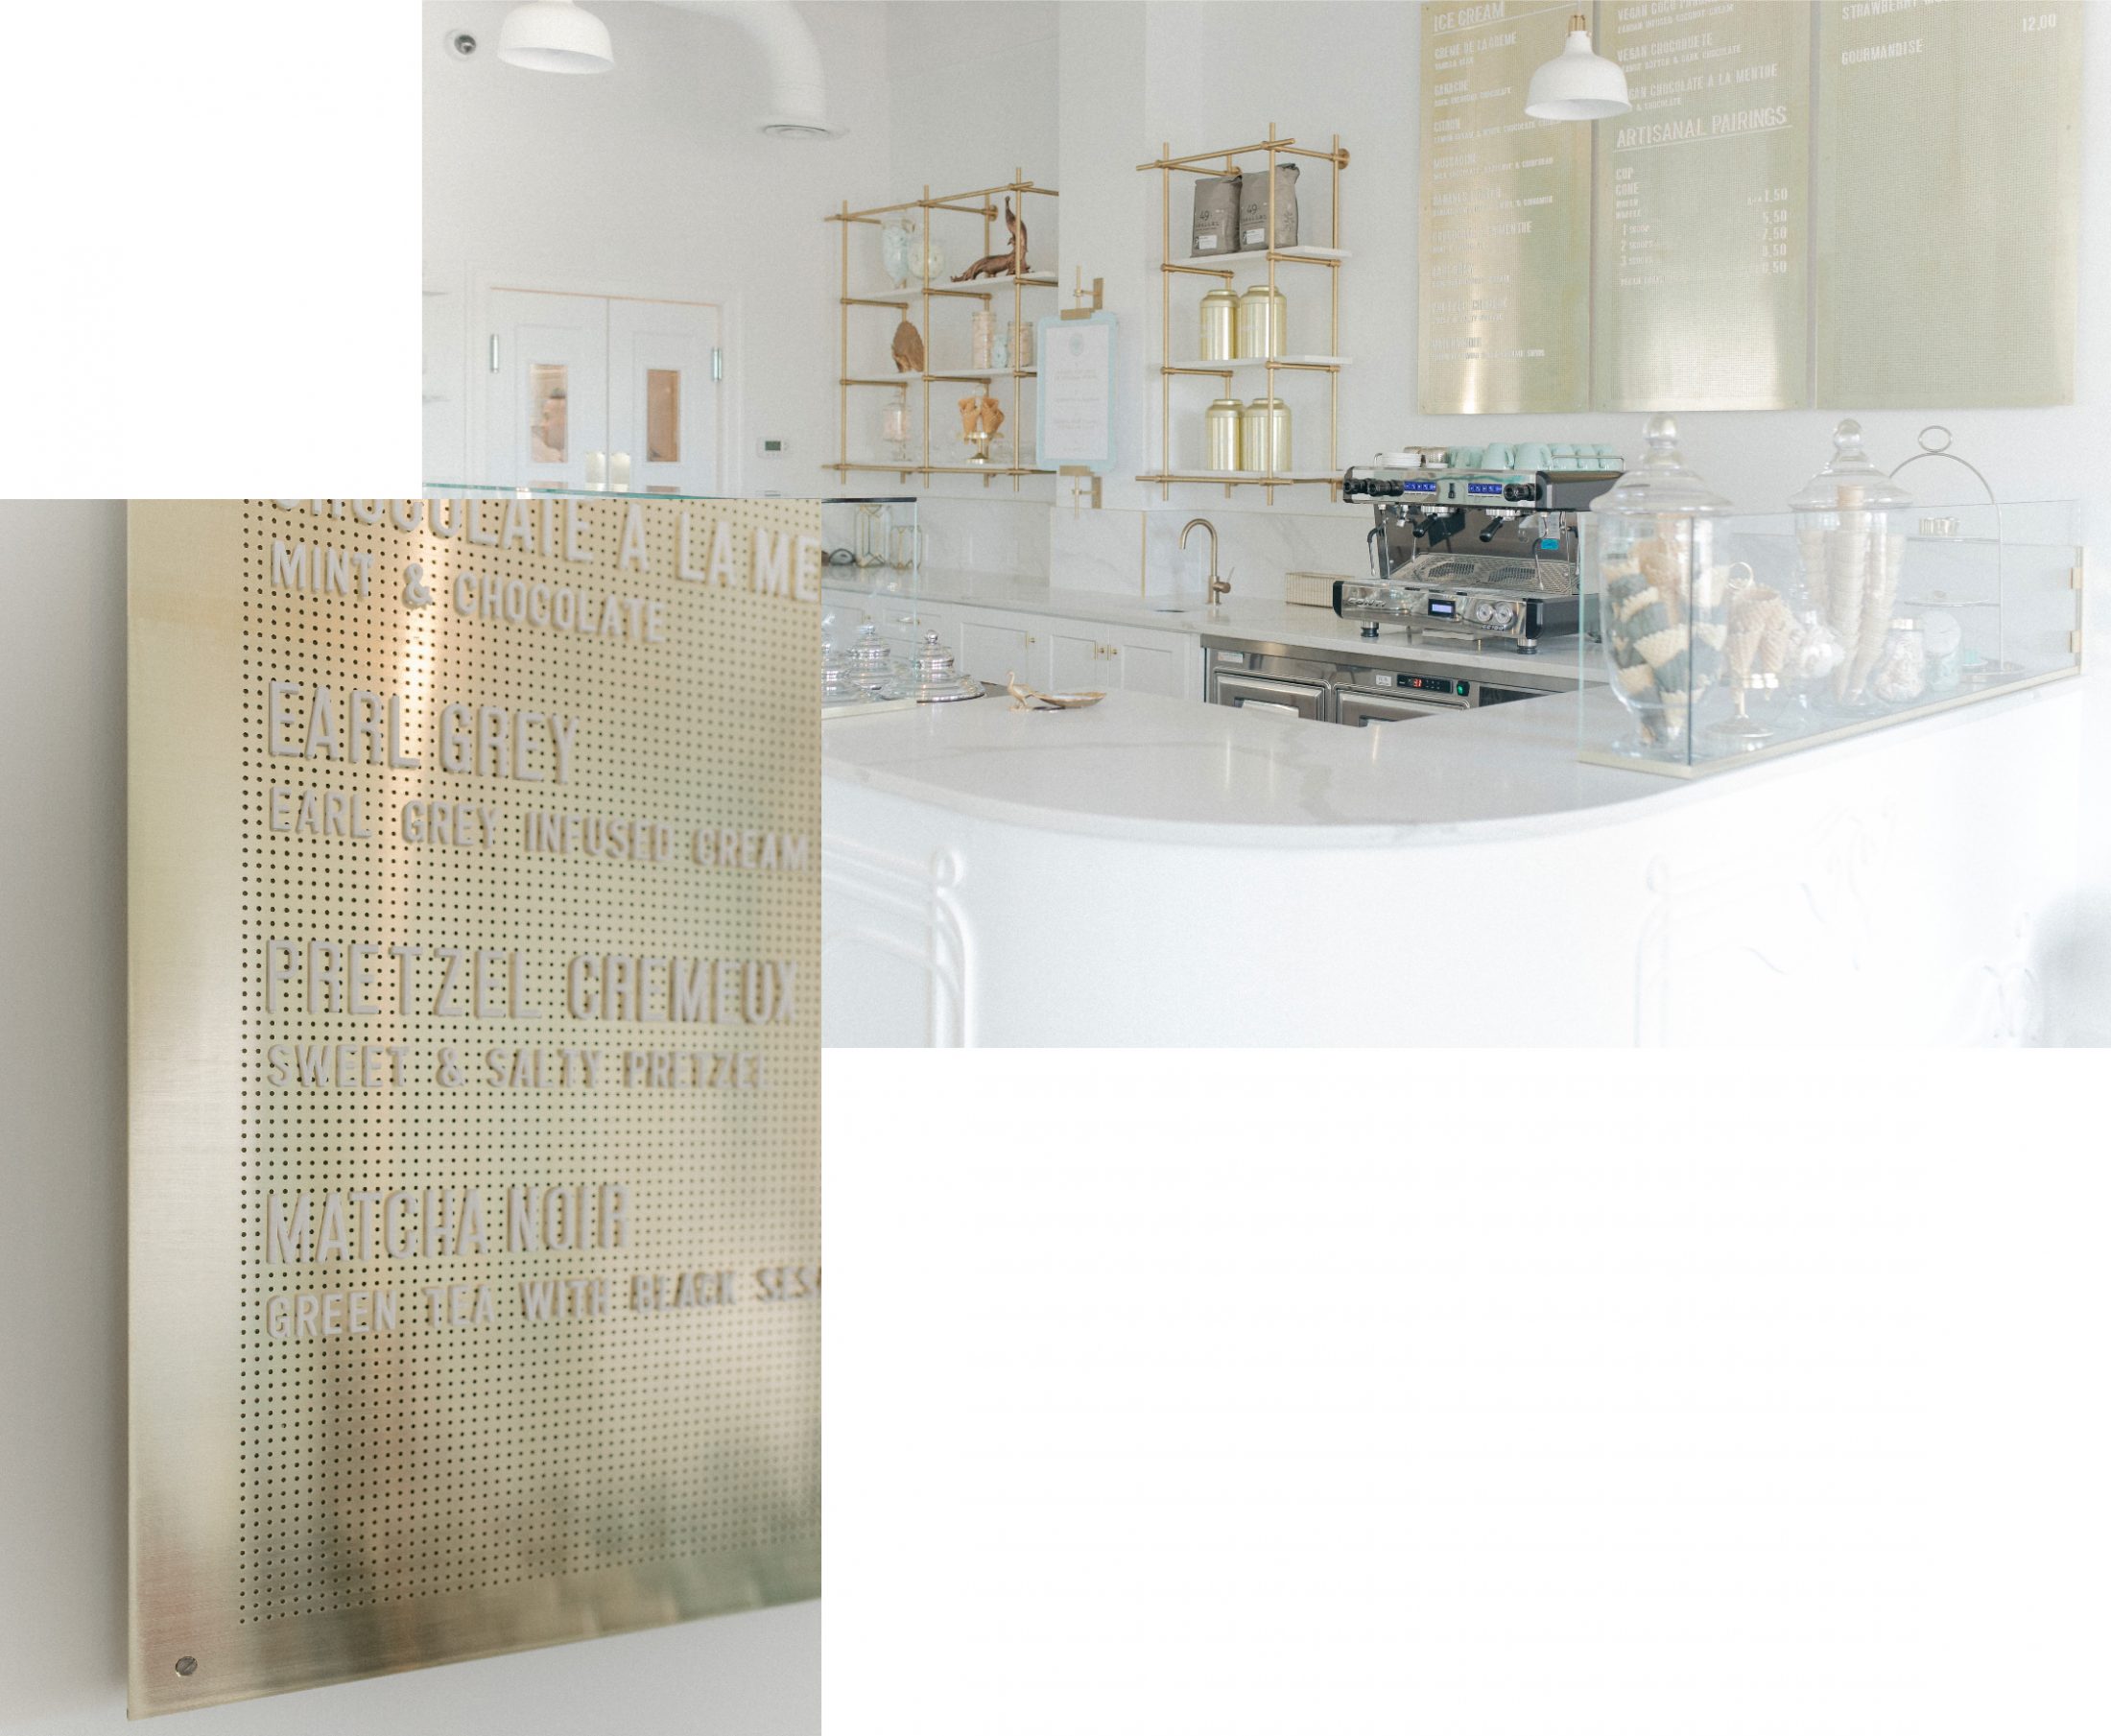 Custom menu design and fabrication for interior design of La Glace ice cream shop.